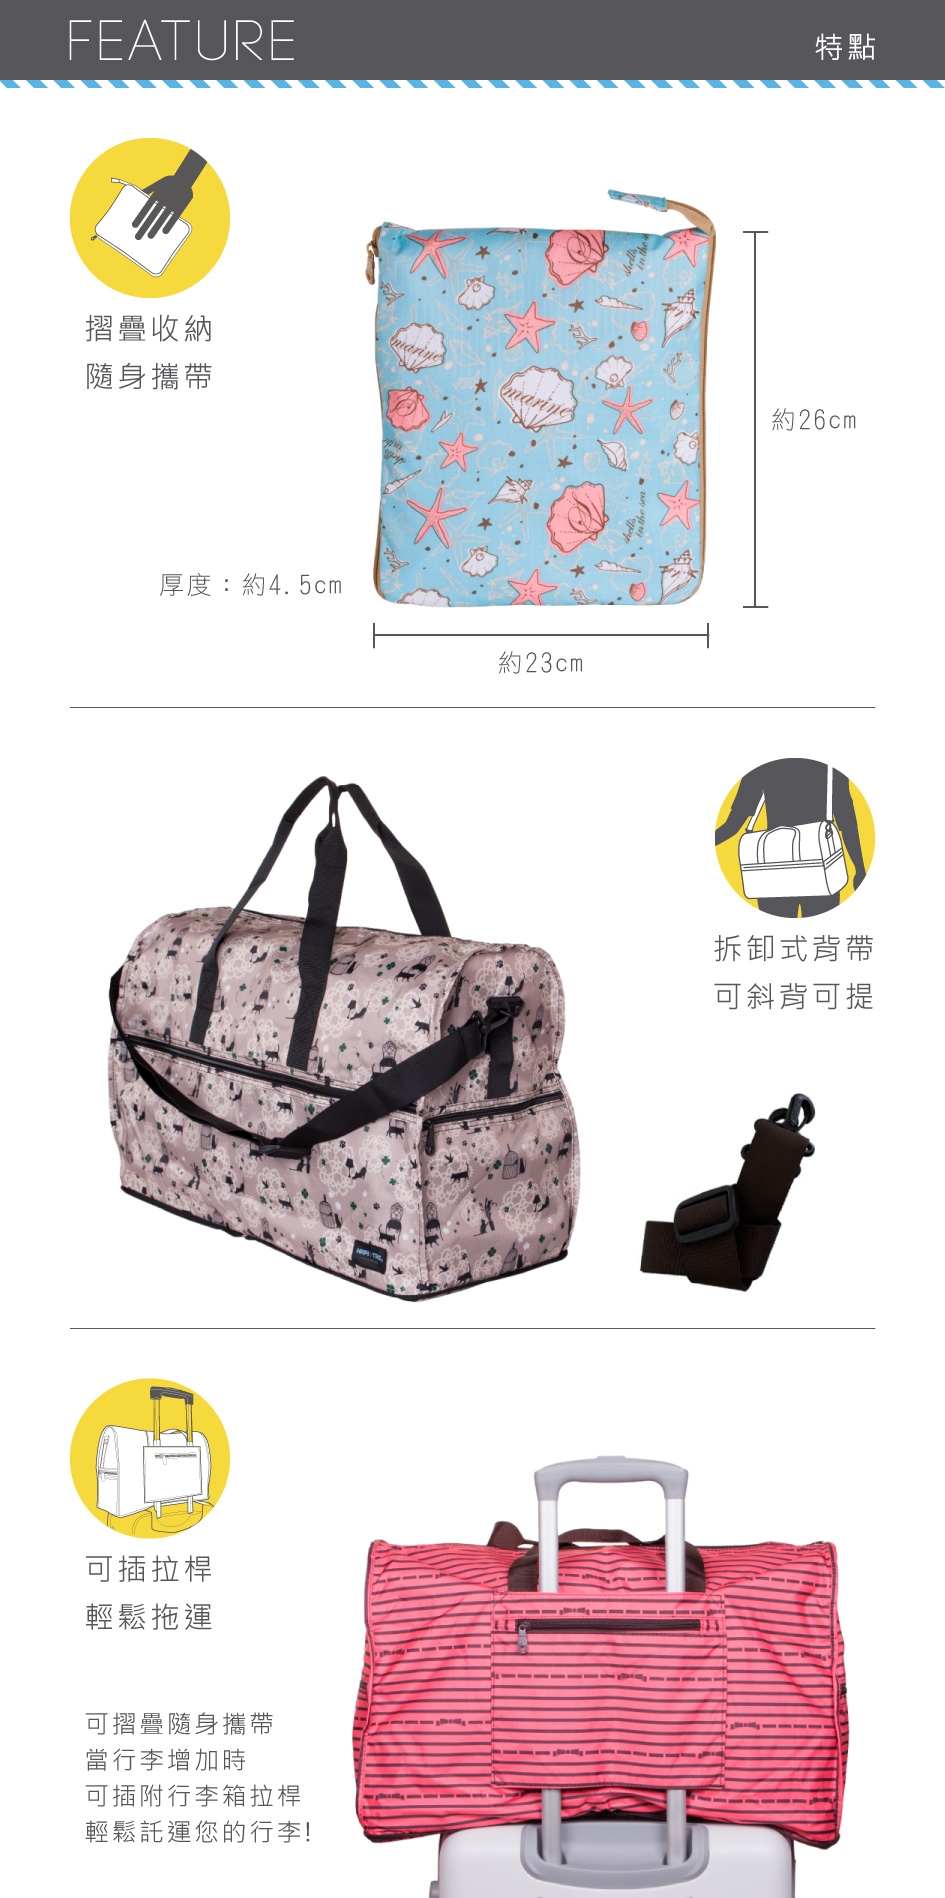 【HAPI+TAS】女孩小物折疊旅行袋(小)-薄荷綠女孩小物